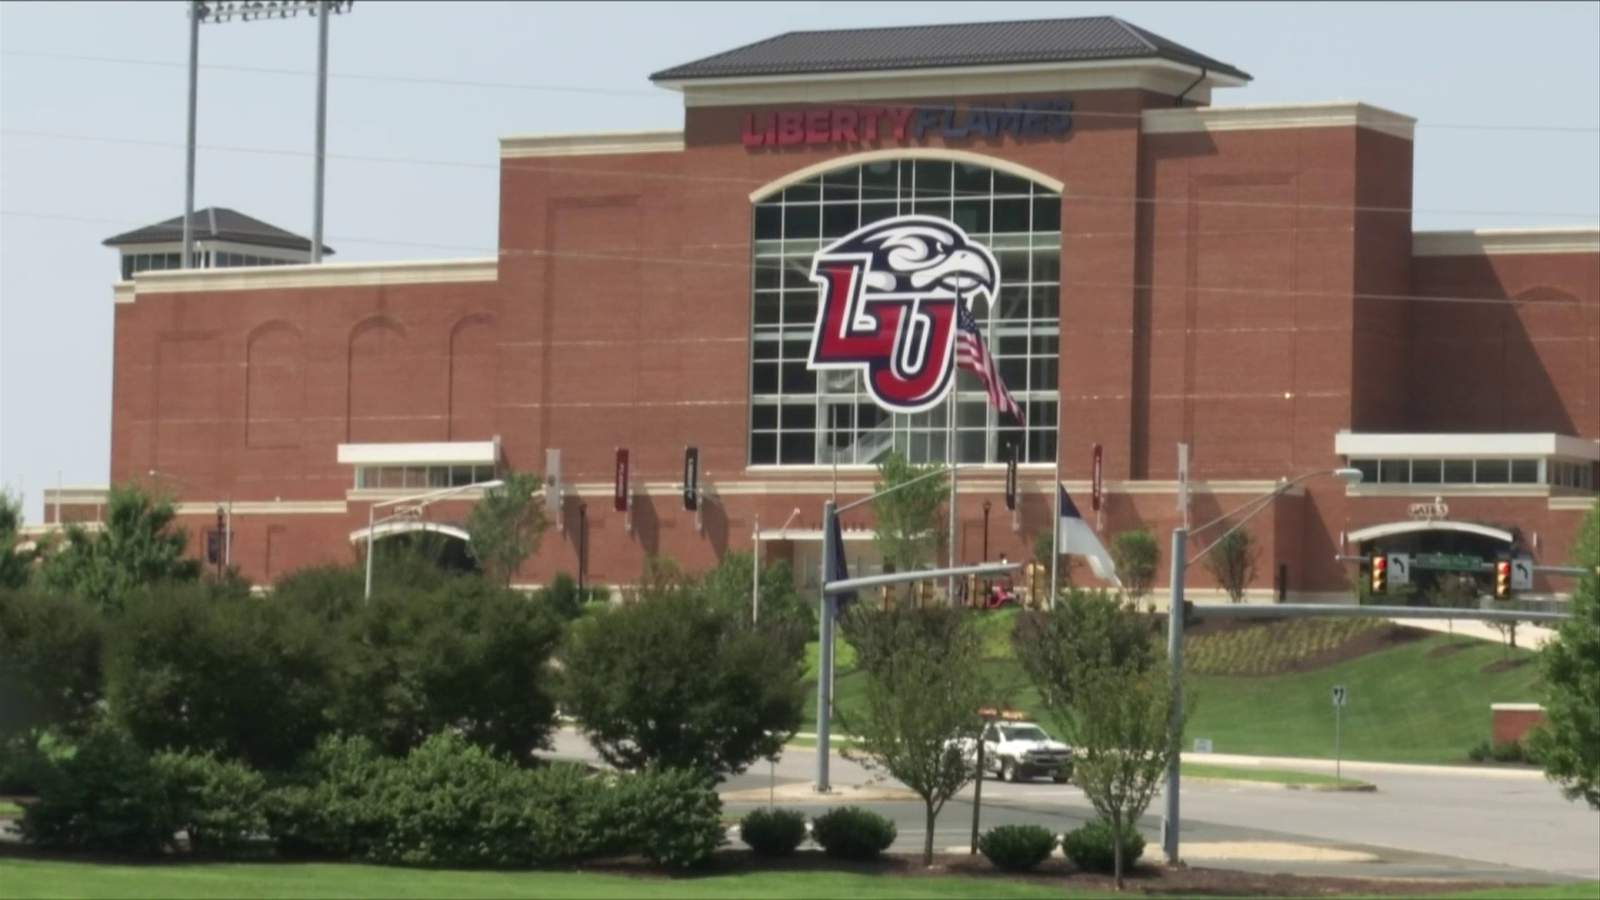 Liberty University will lose power Monday night for repairs